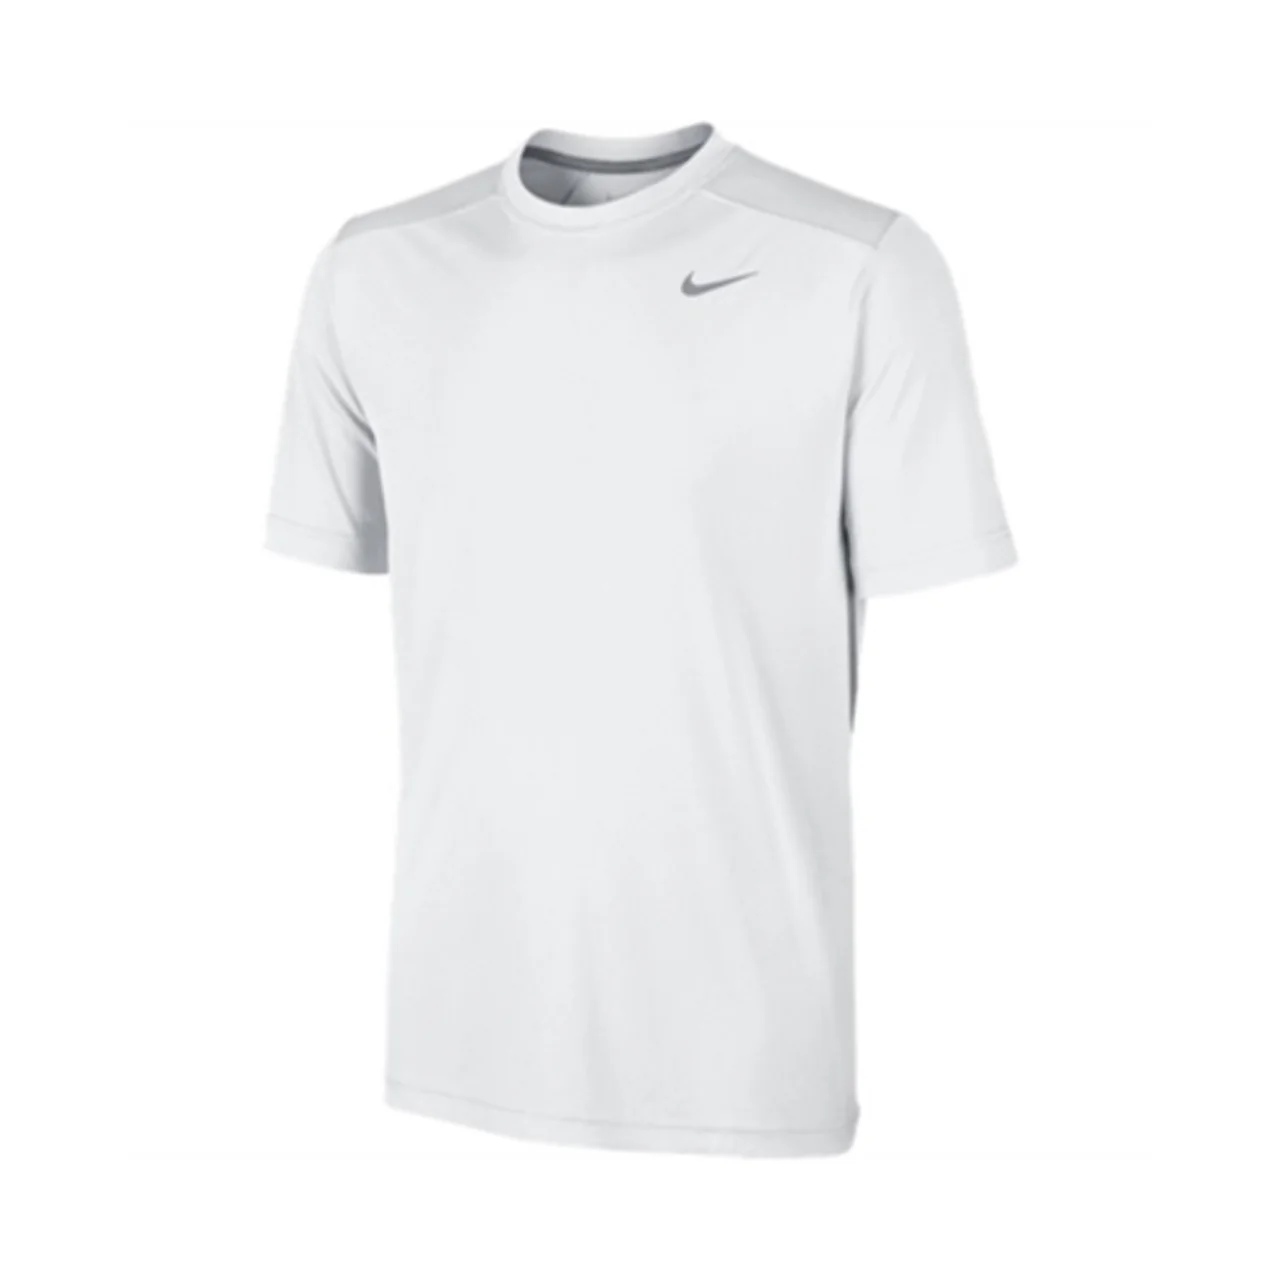 Nike Legacy SS Top White